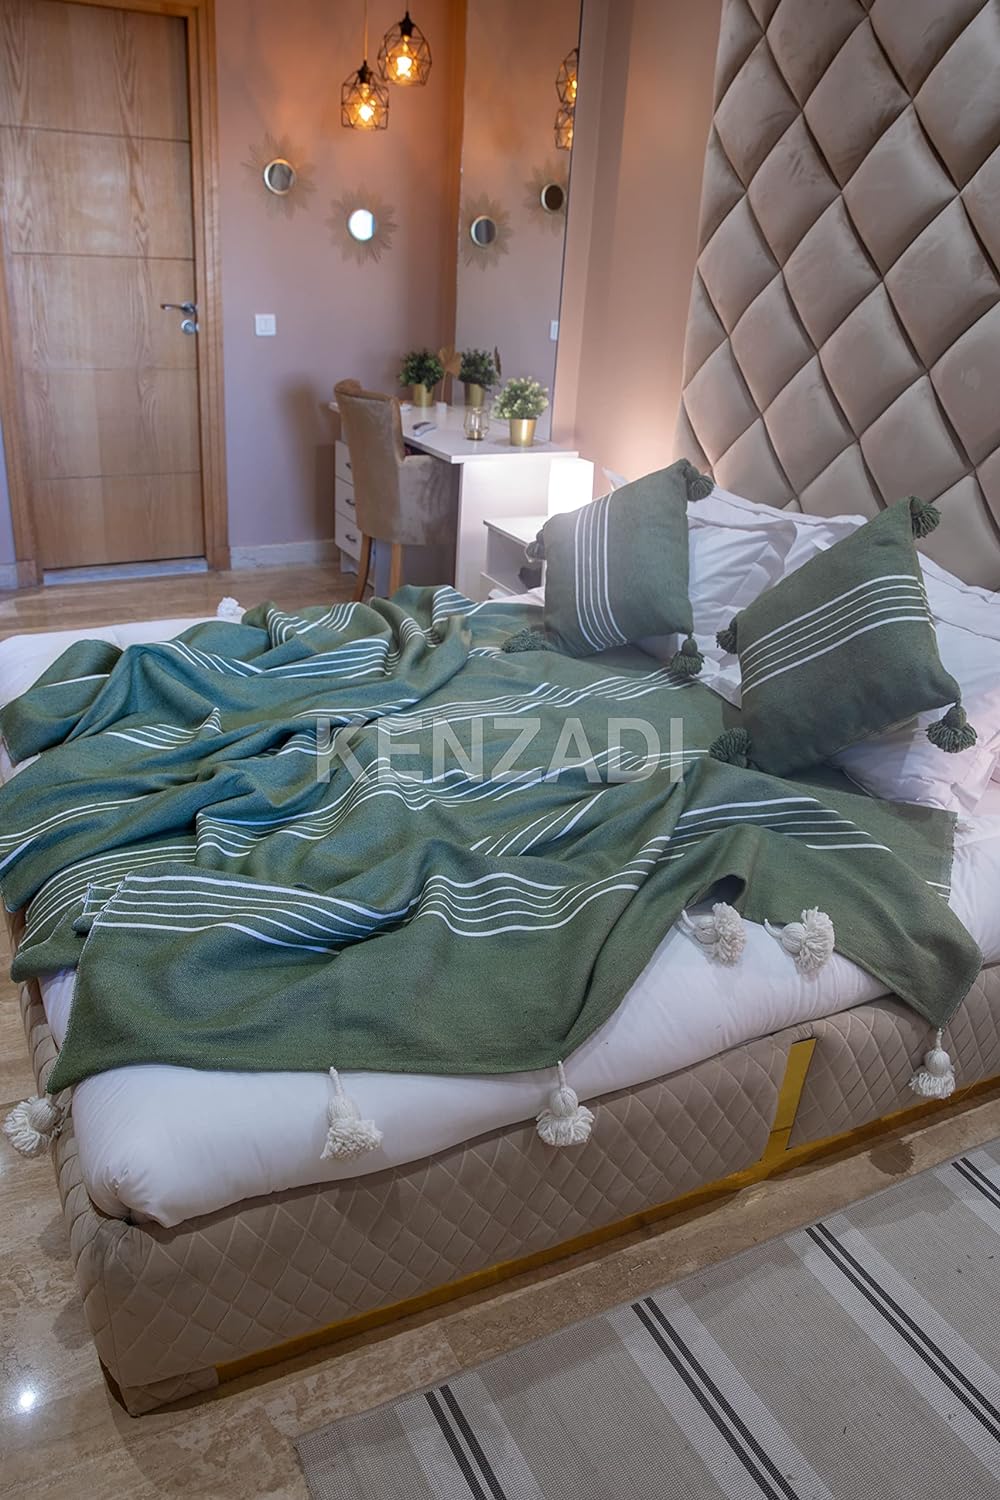 KENZADI Moroccan Handmade Pompom Blanket, Throw Blanket, Pom Pom Blanket, Boho Blanket, Bed Cover, Warm Blanket, Cozy Blanket (Striped Green with pom White, Queen (U.S. Standard)) - Handmade by My Poufs